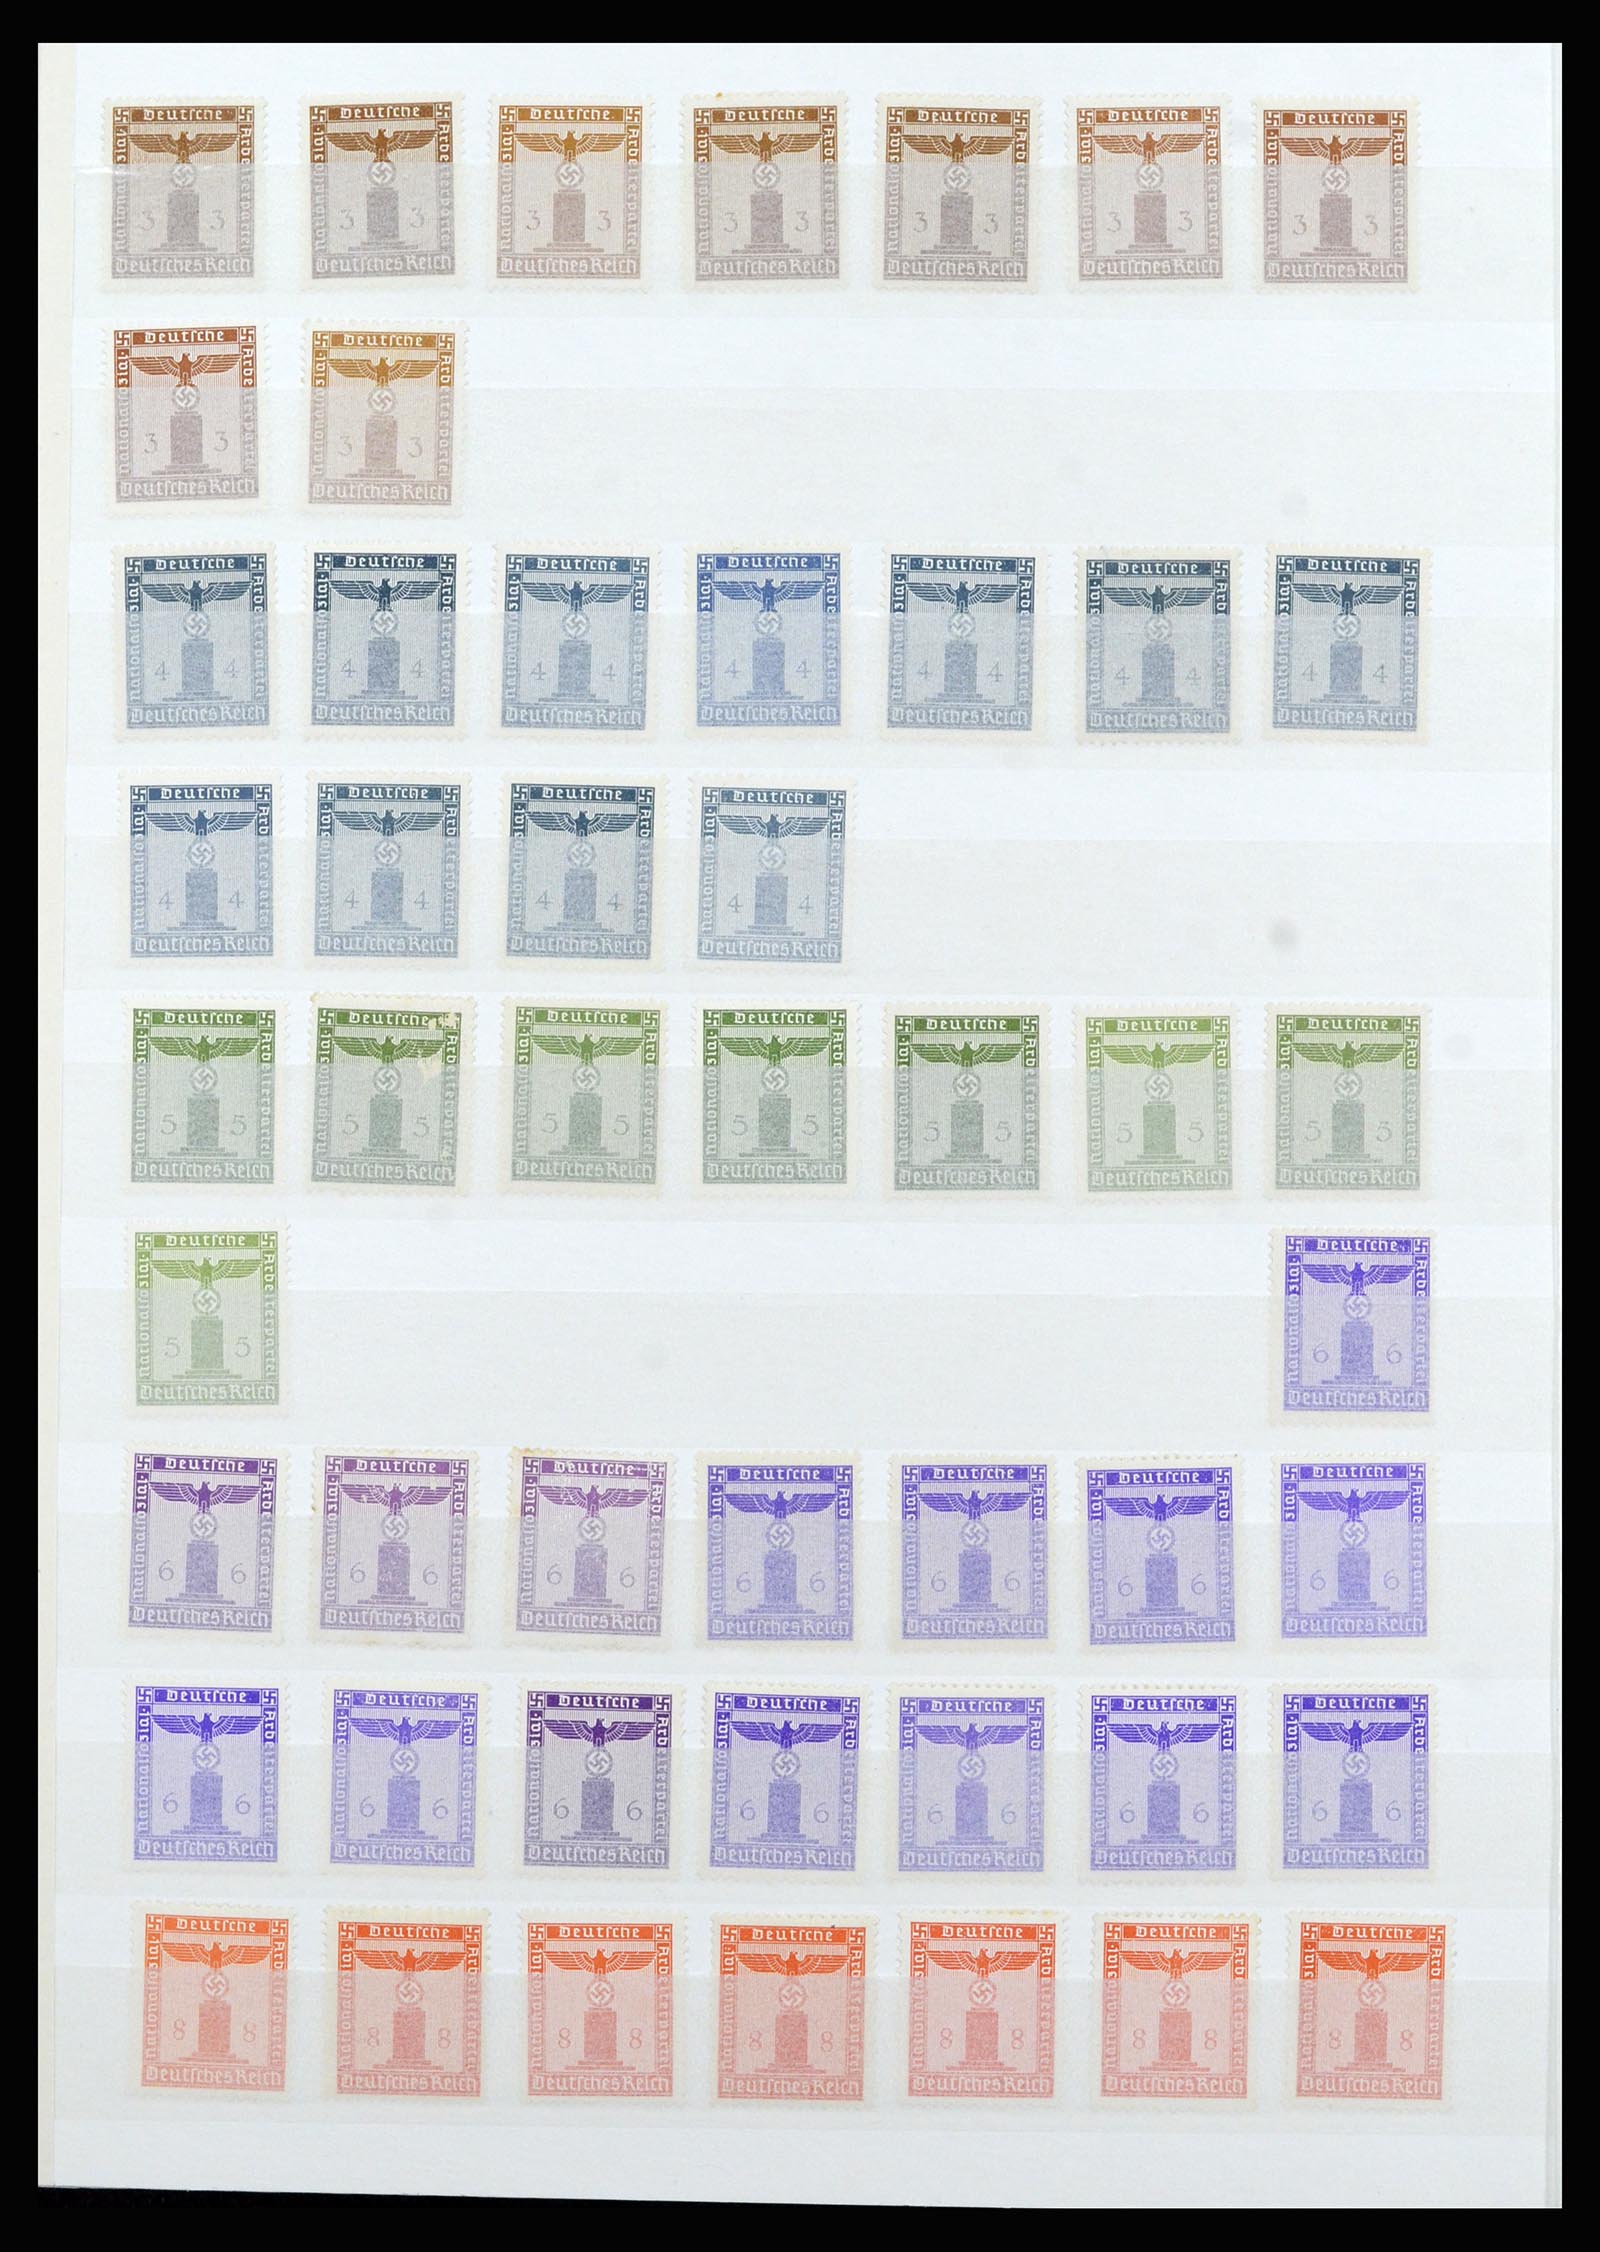 37103 052 - Stamp collection 37103 German Reich 1880-1945.